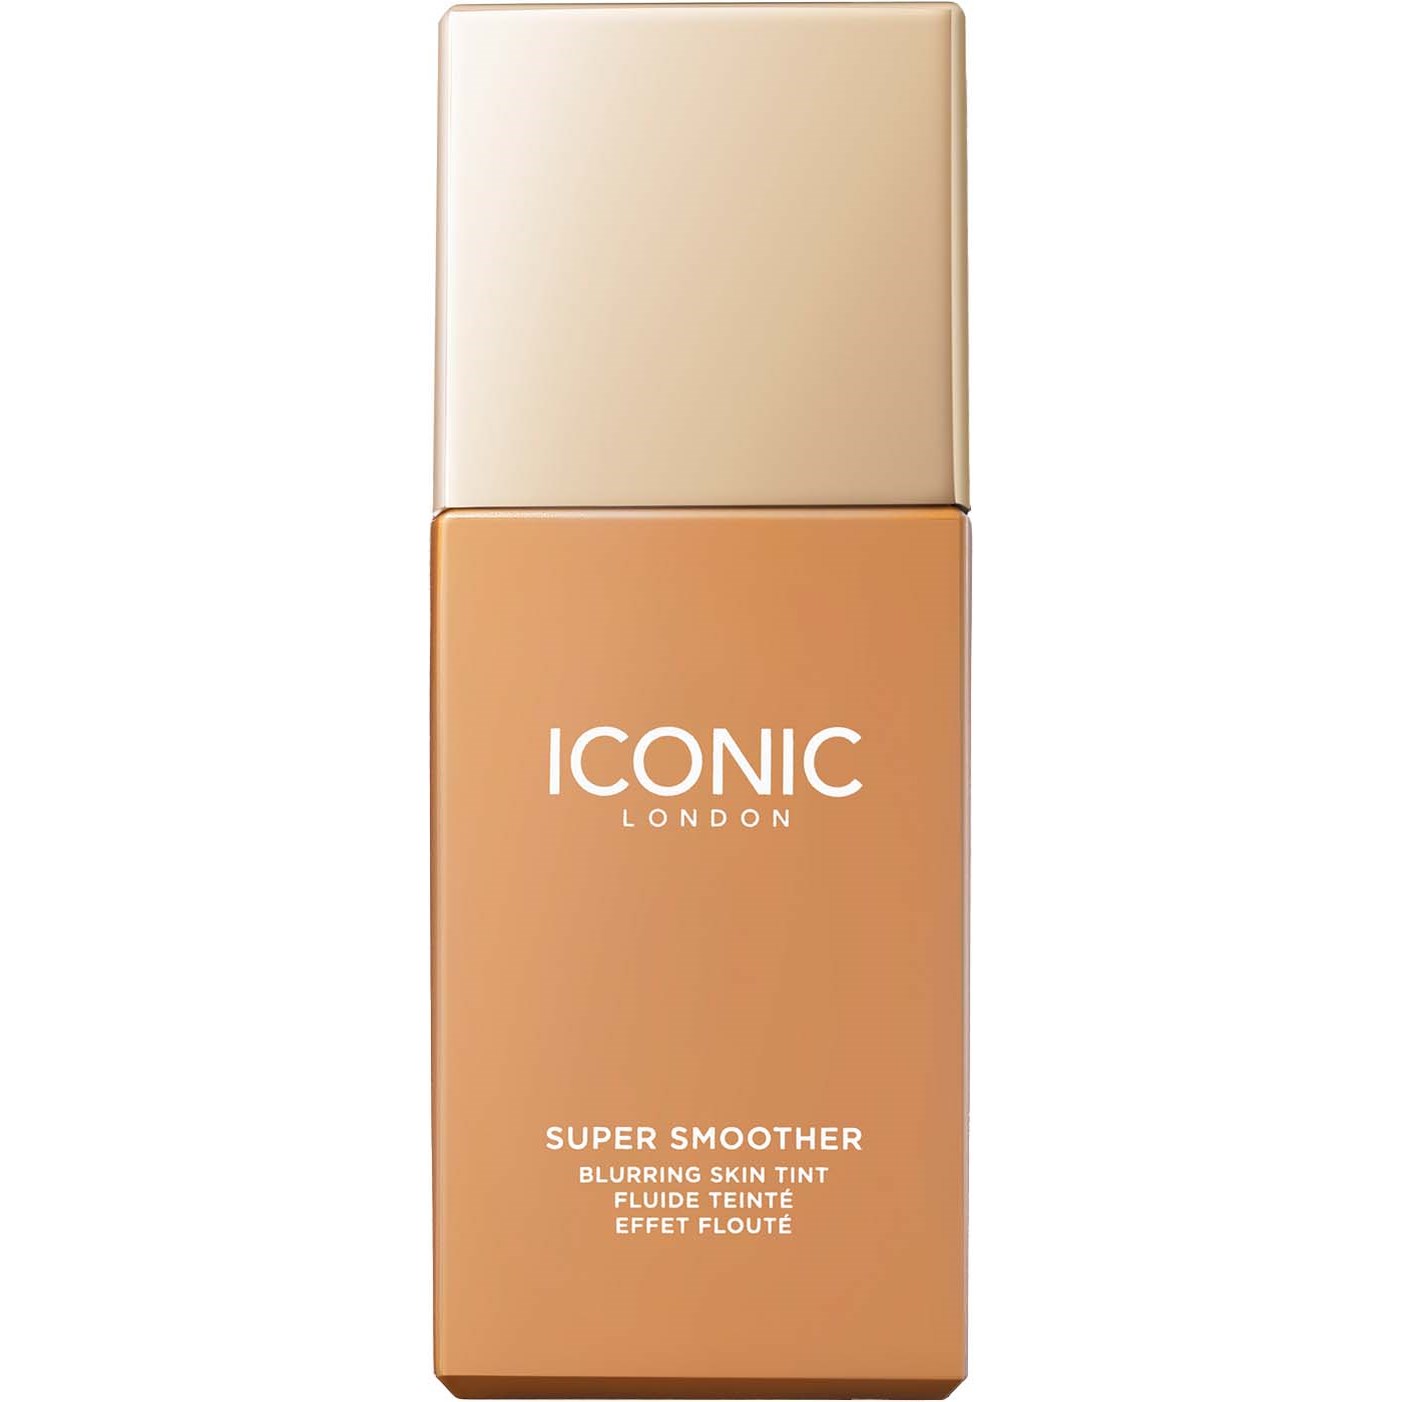 ICONIC London Super Smoother Blurring Skin Tint Golden Medium